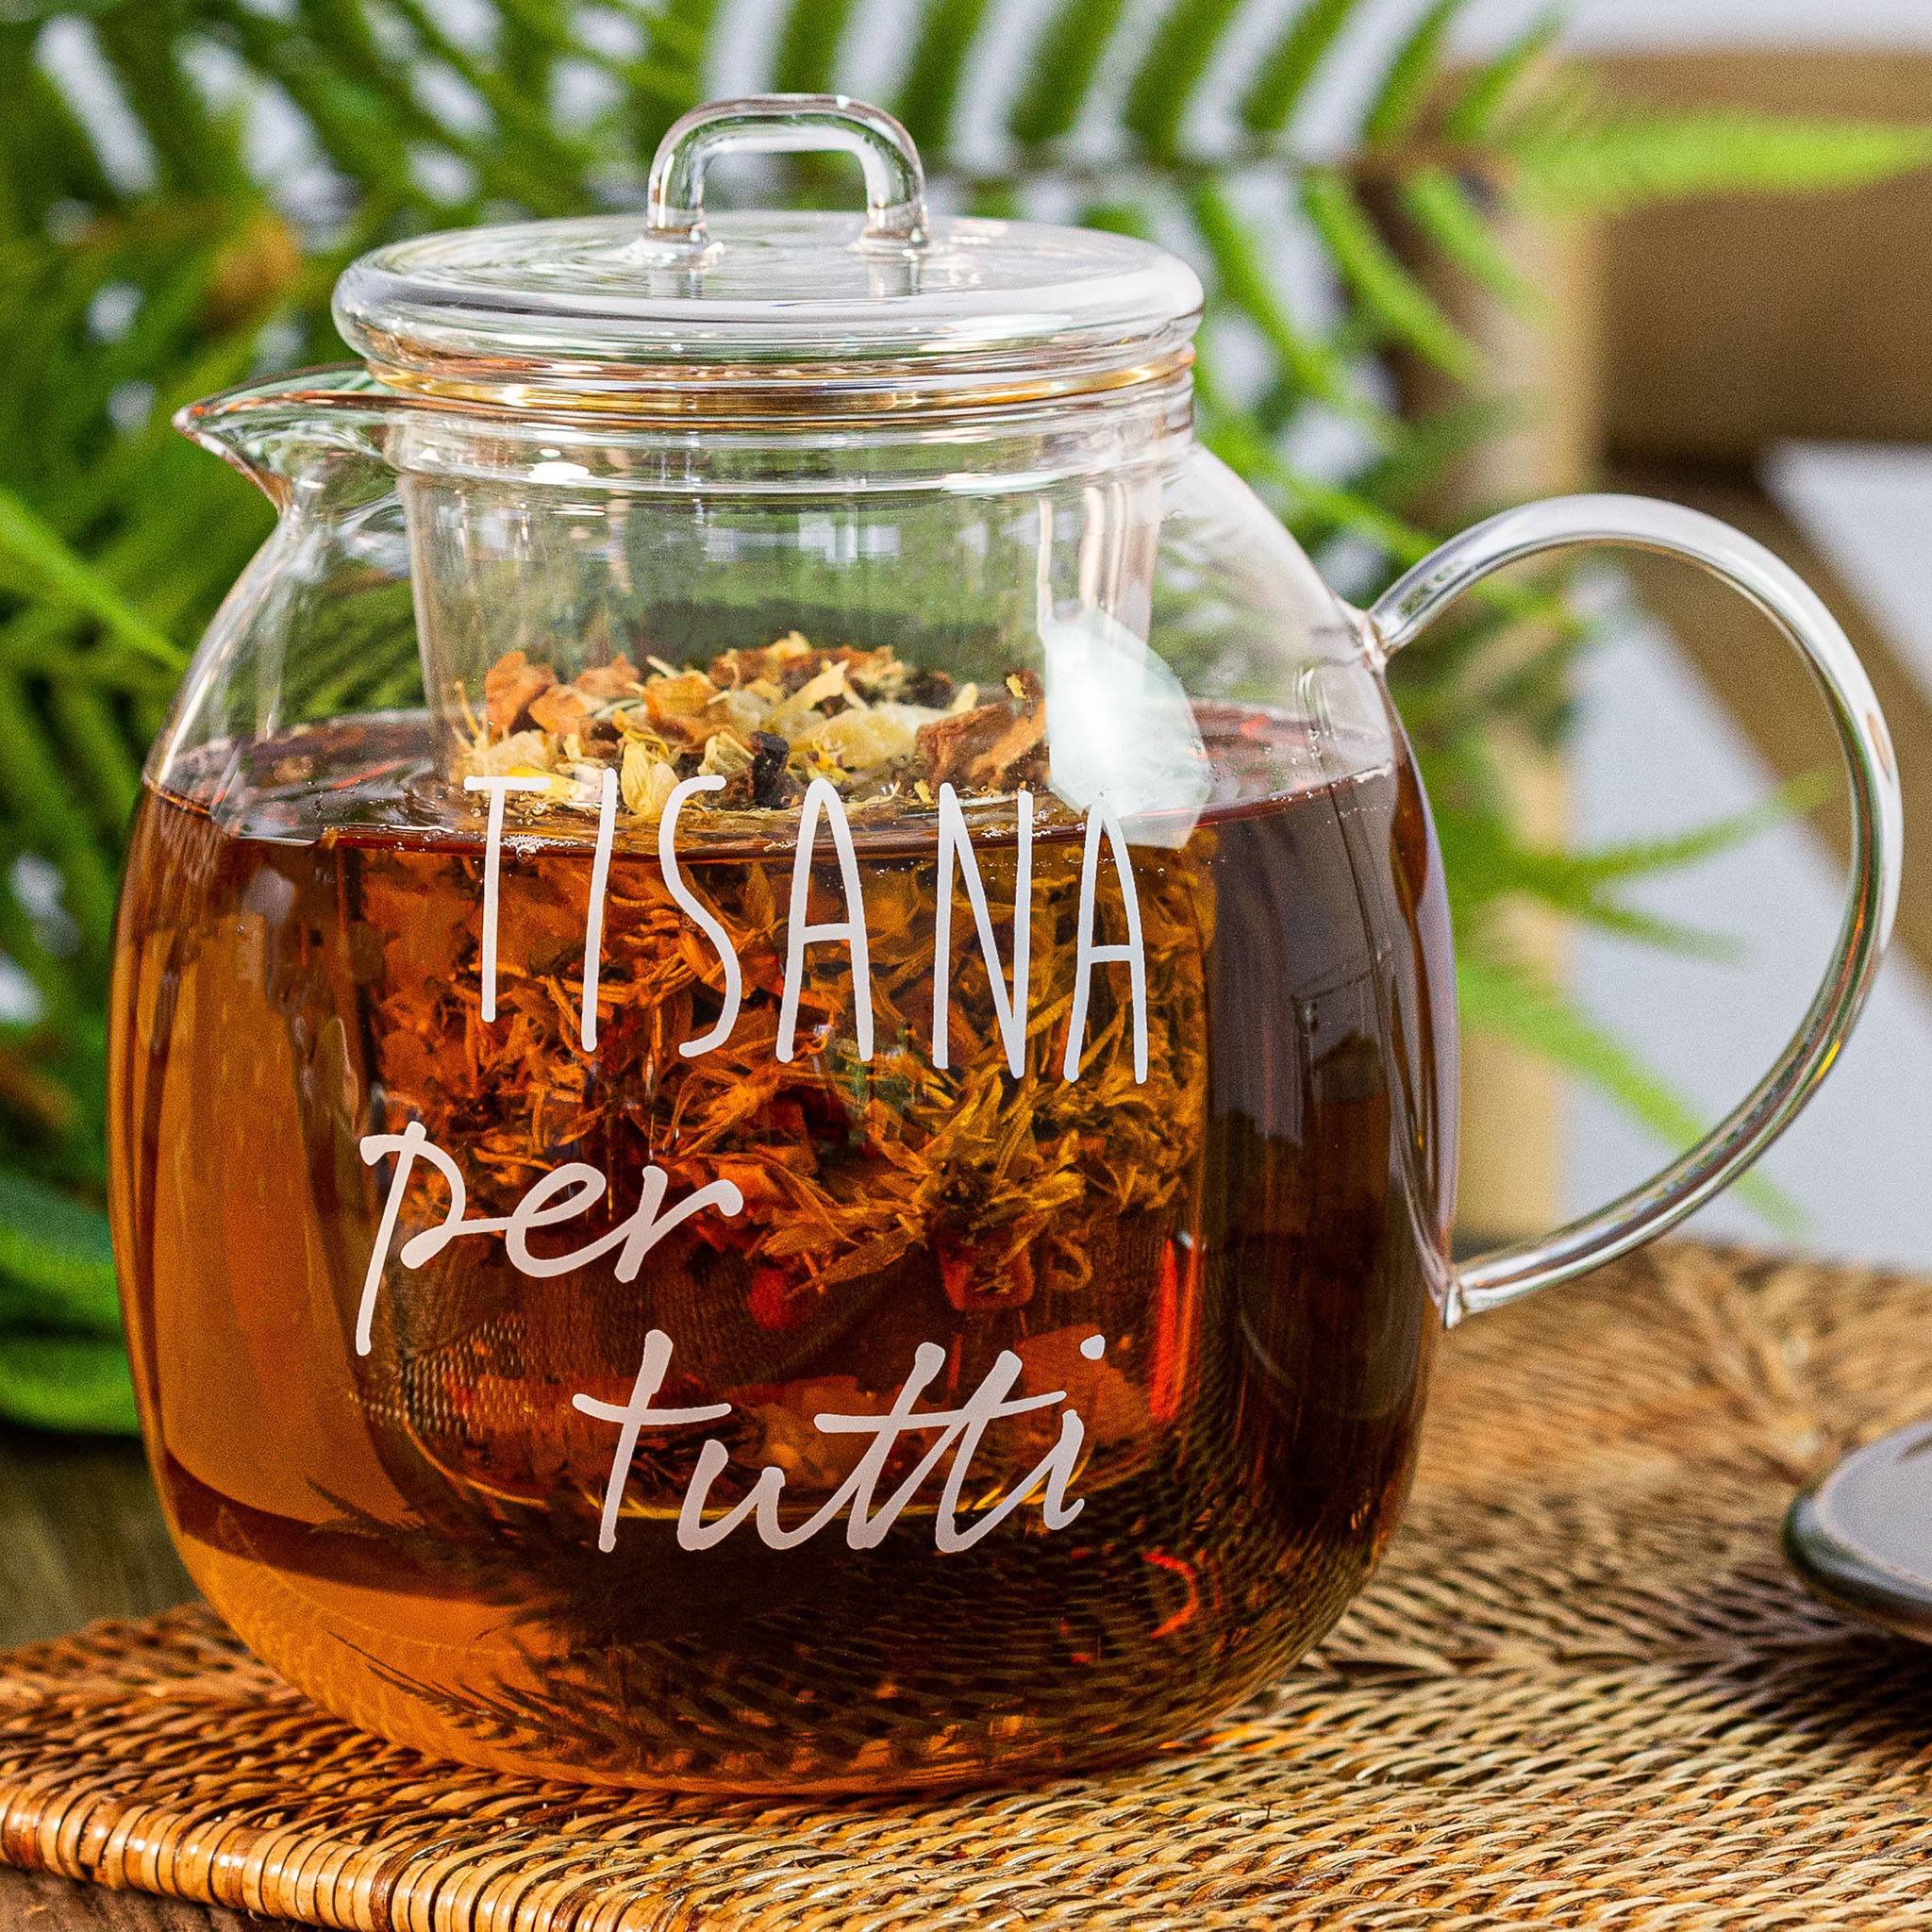 Great herbal teas for everyone